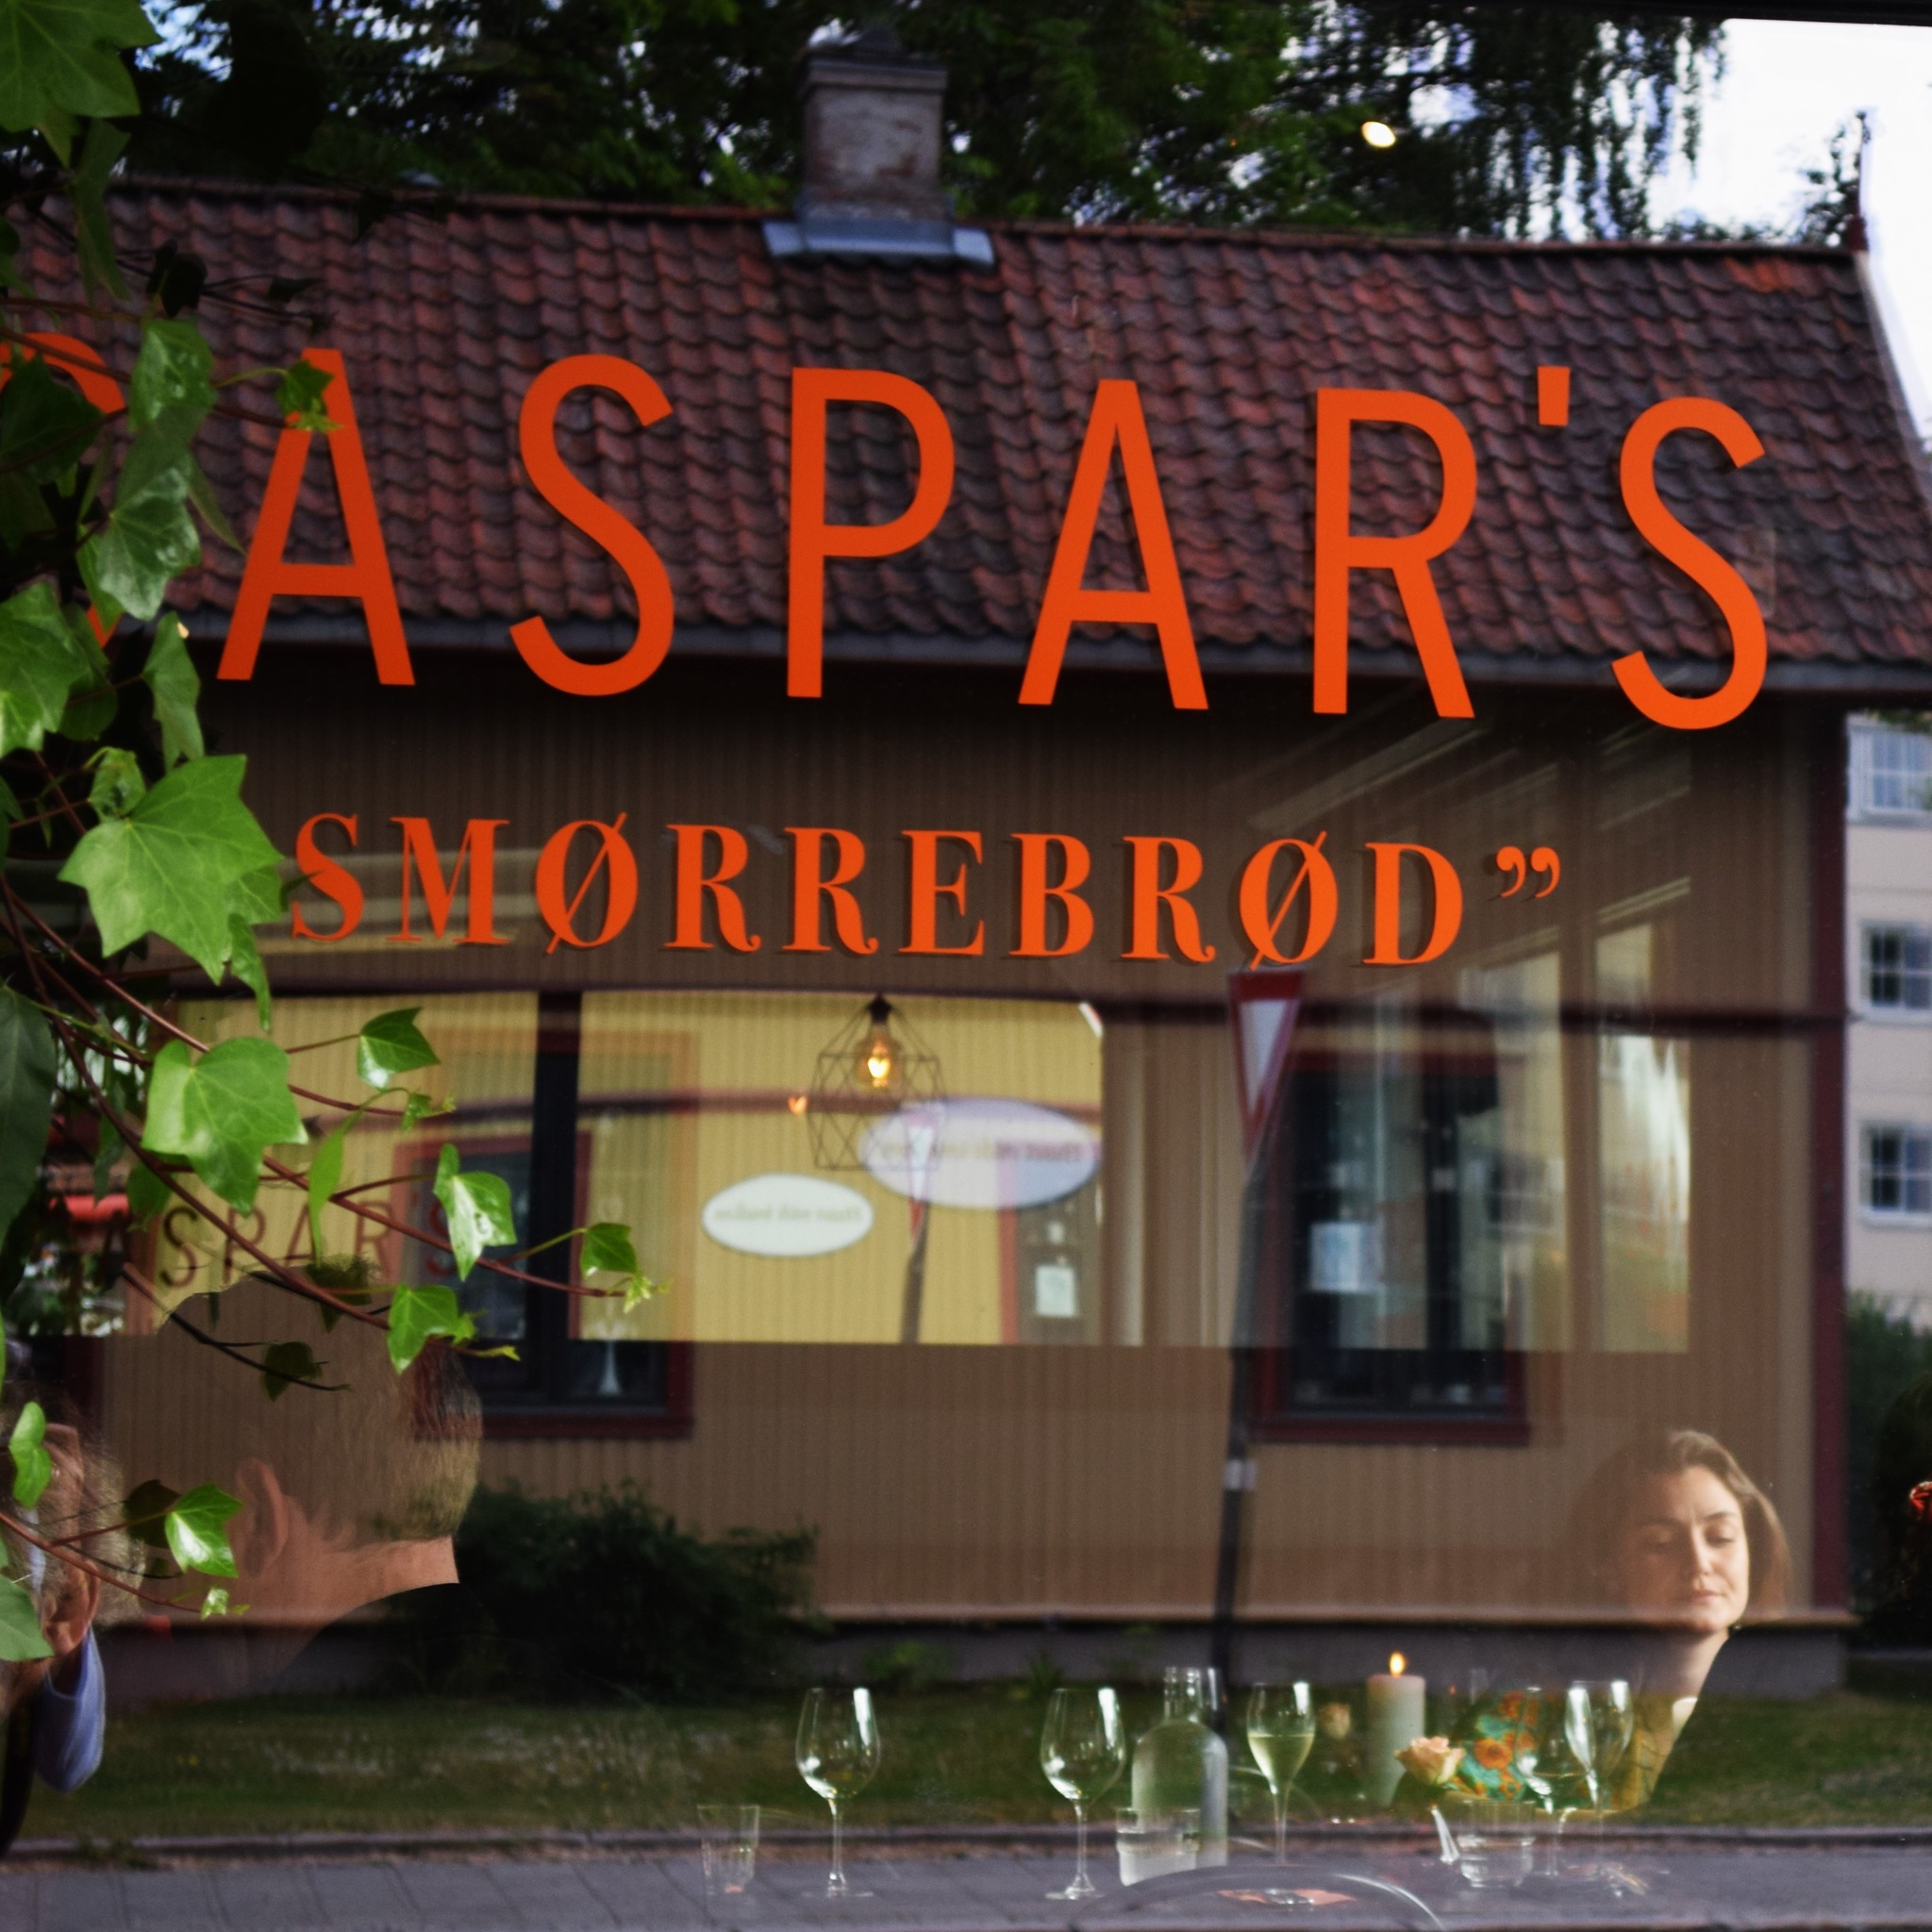 Caspars smørrebrød